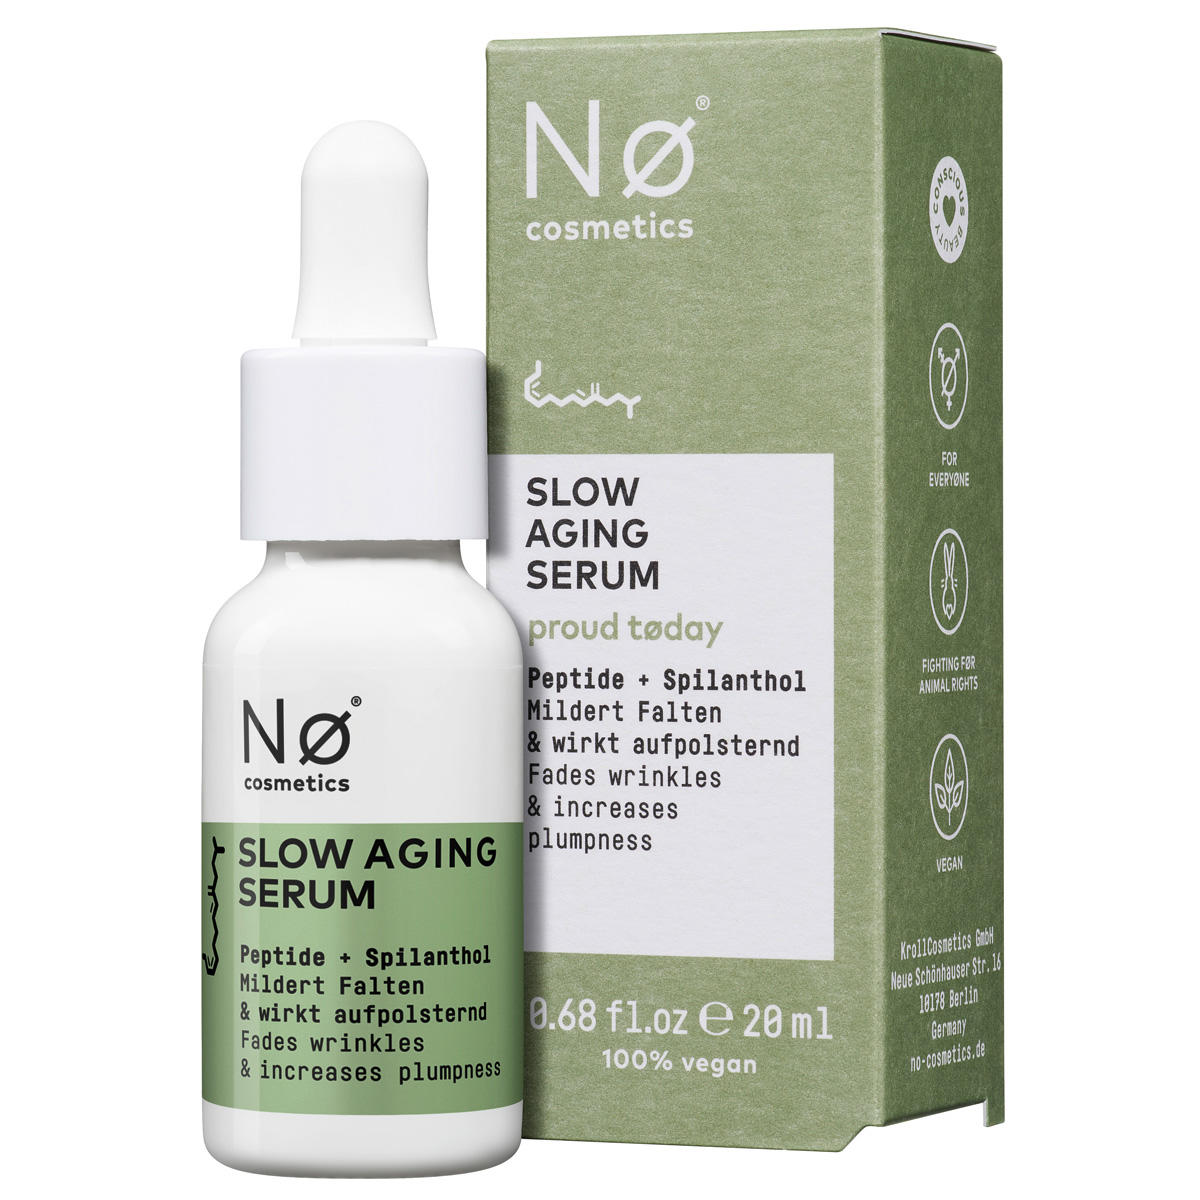 Nø Cosmetics proud tøday Slow Aging Serum 20 ml - 1